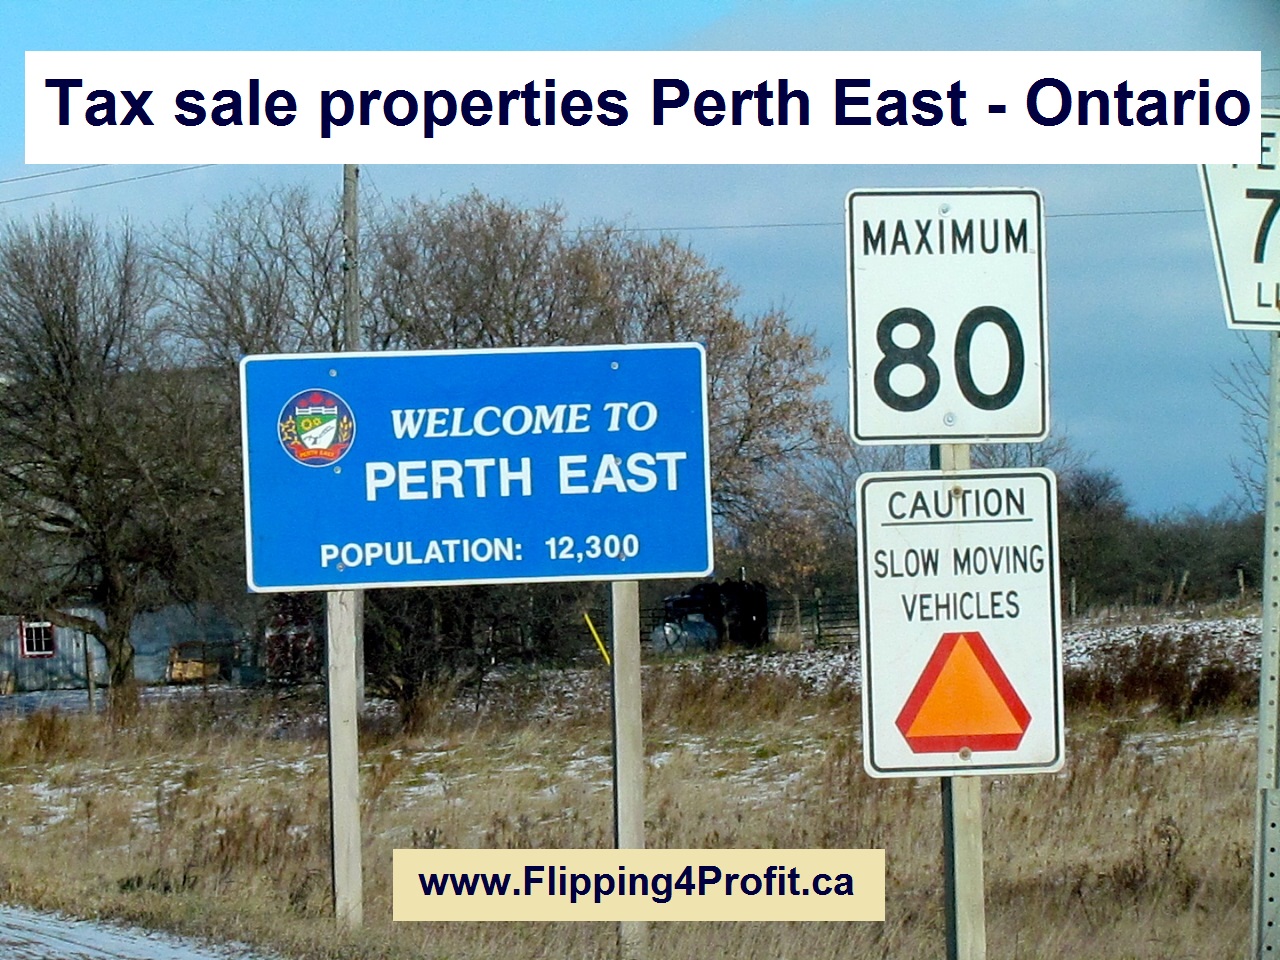 Tax sale properties Perth East - Ontario